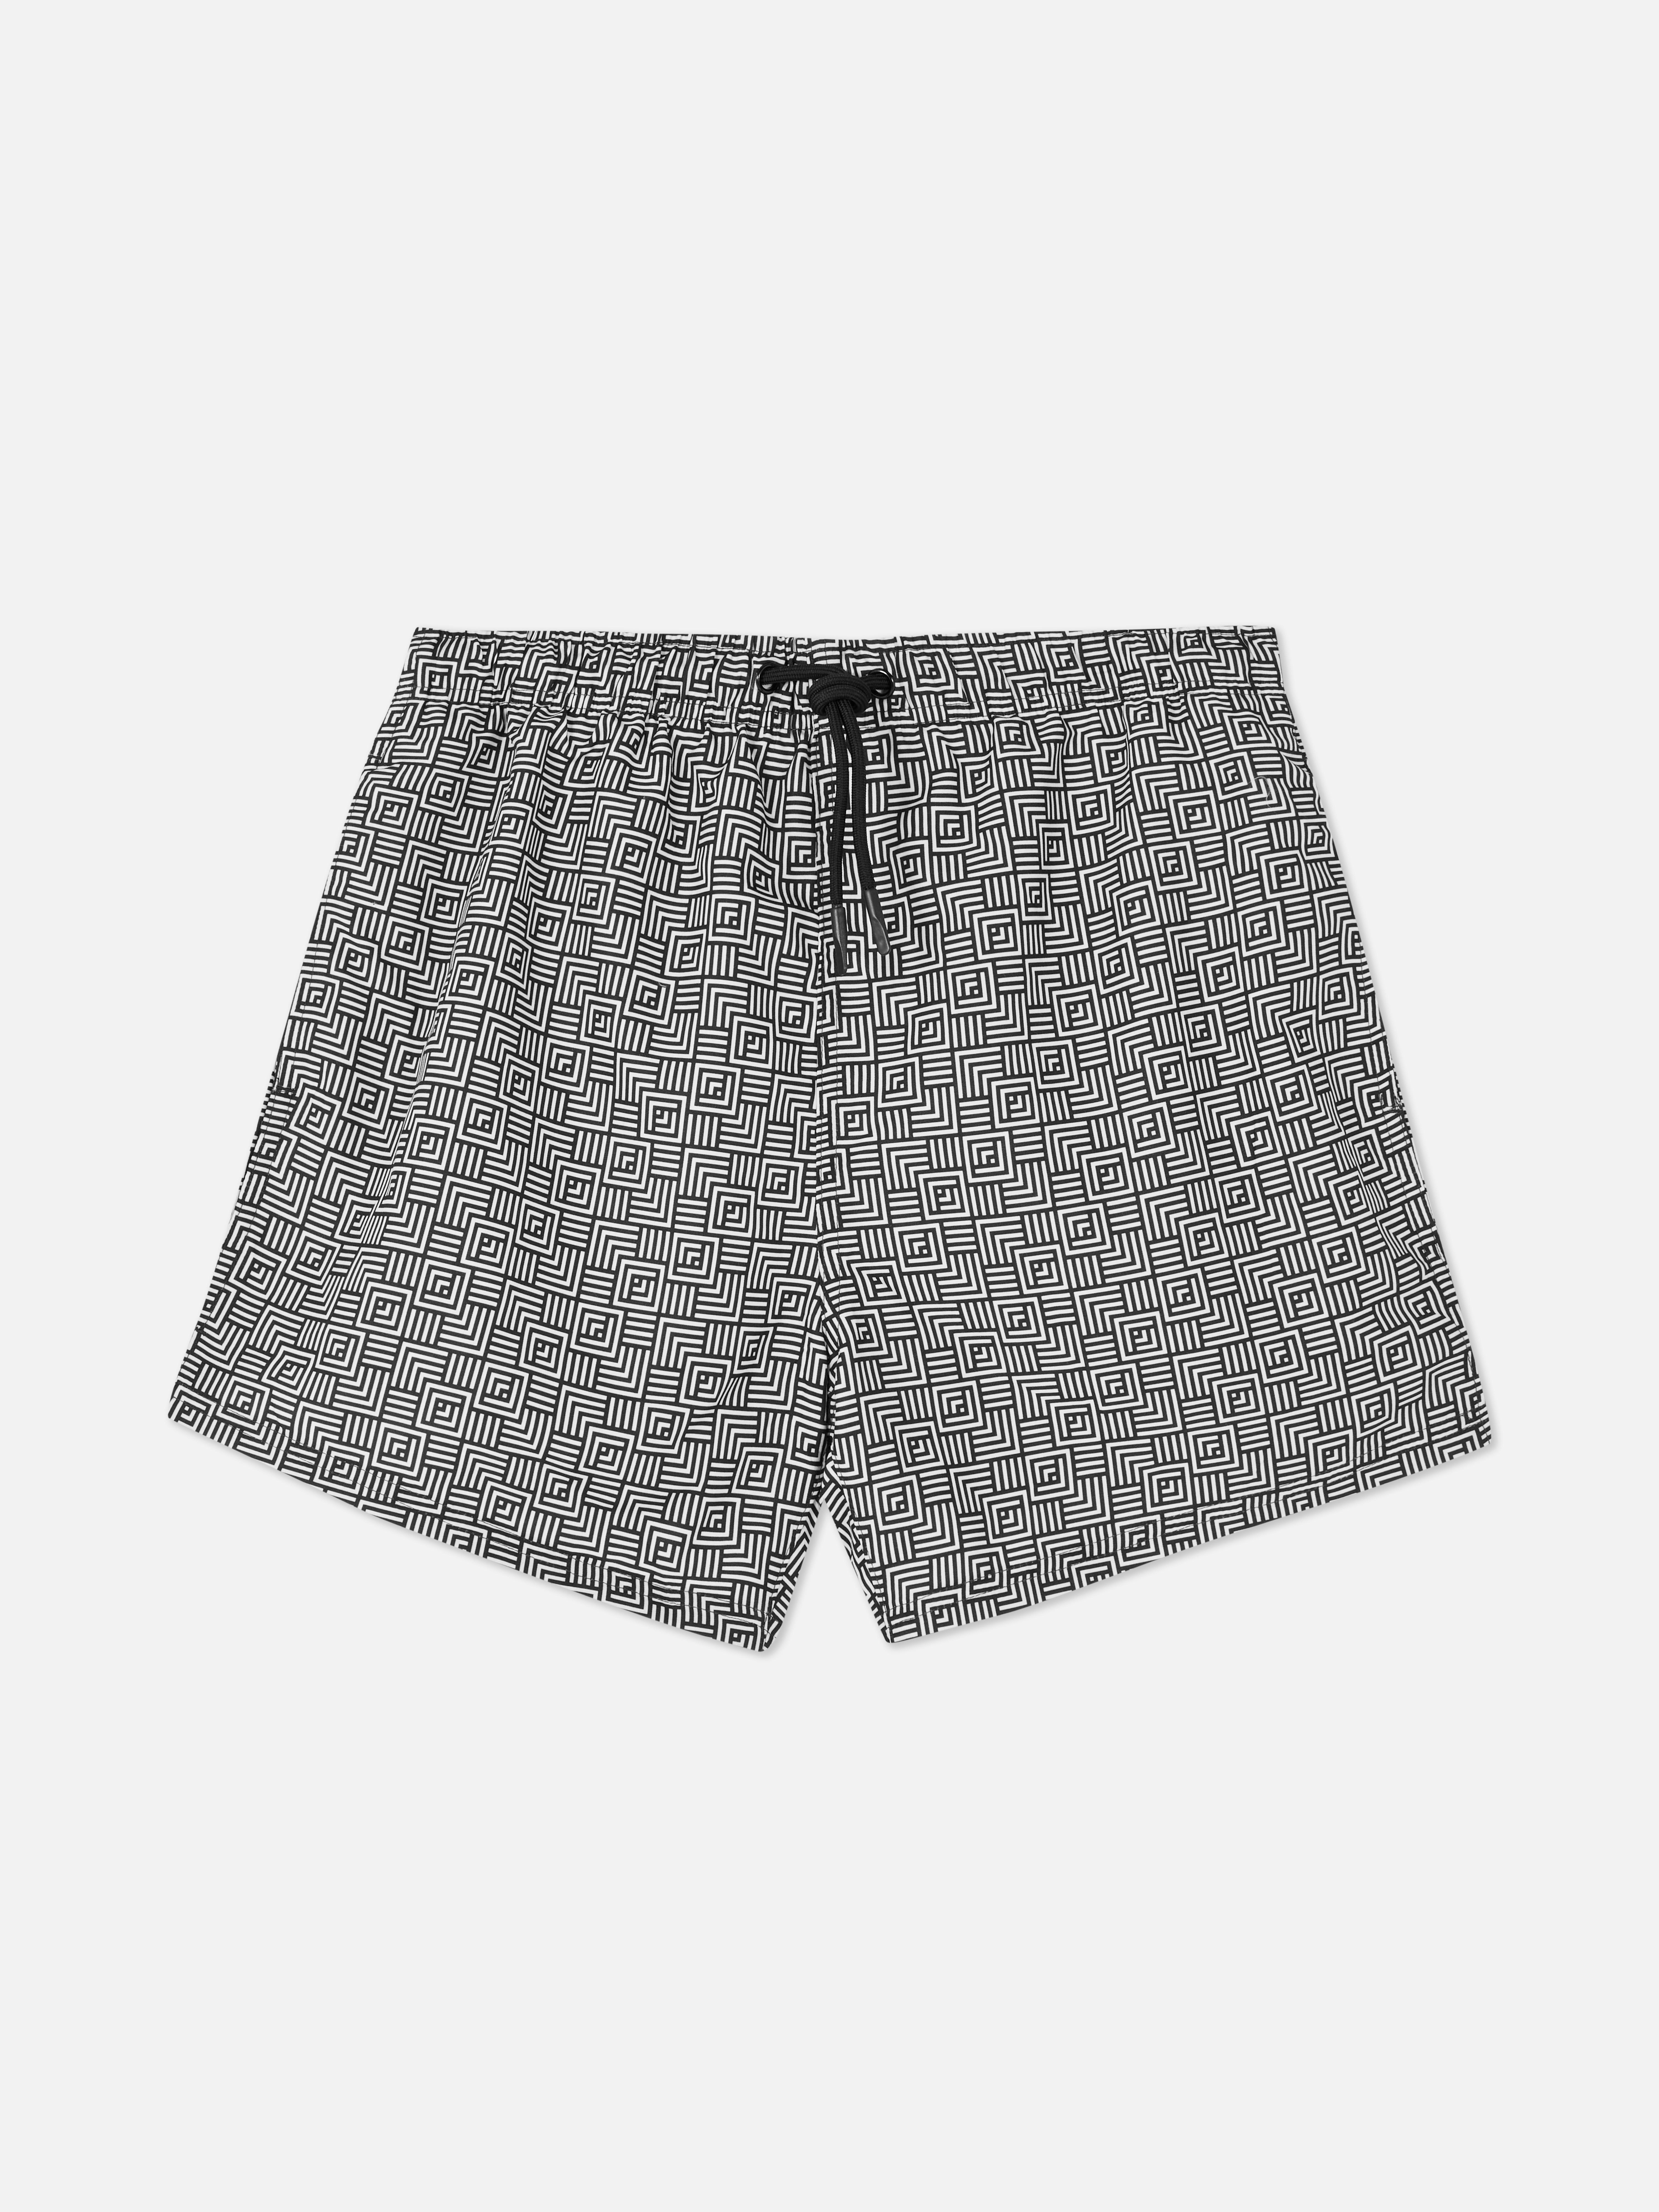 Printed Patterned Swim Shorts